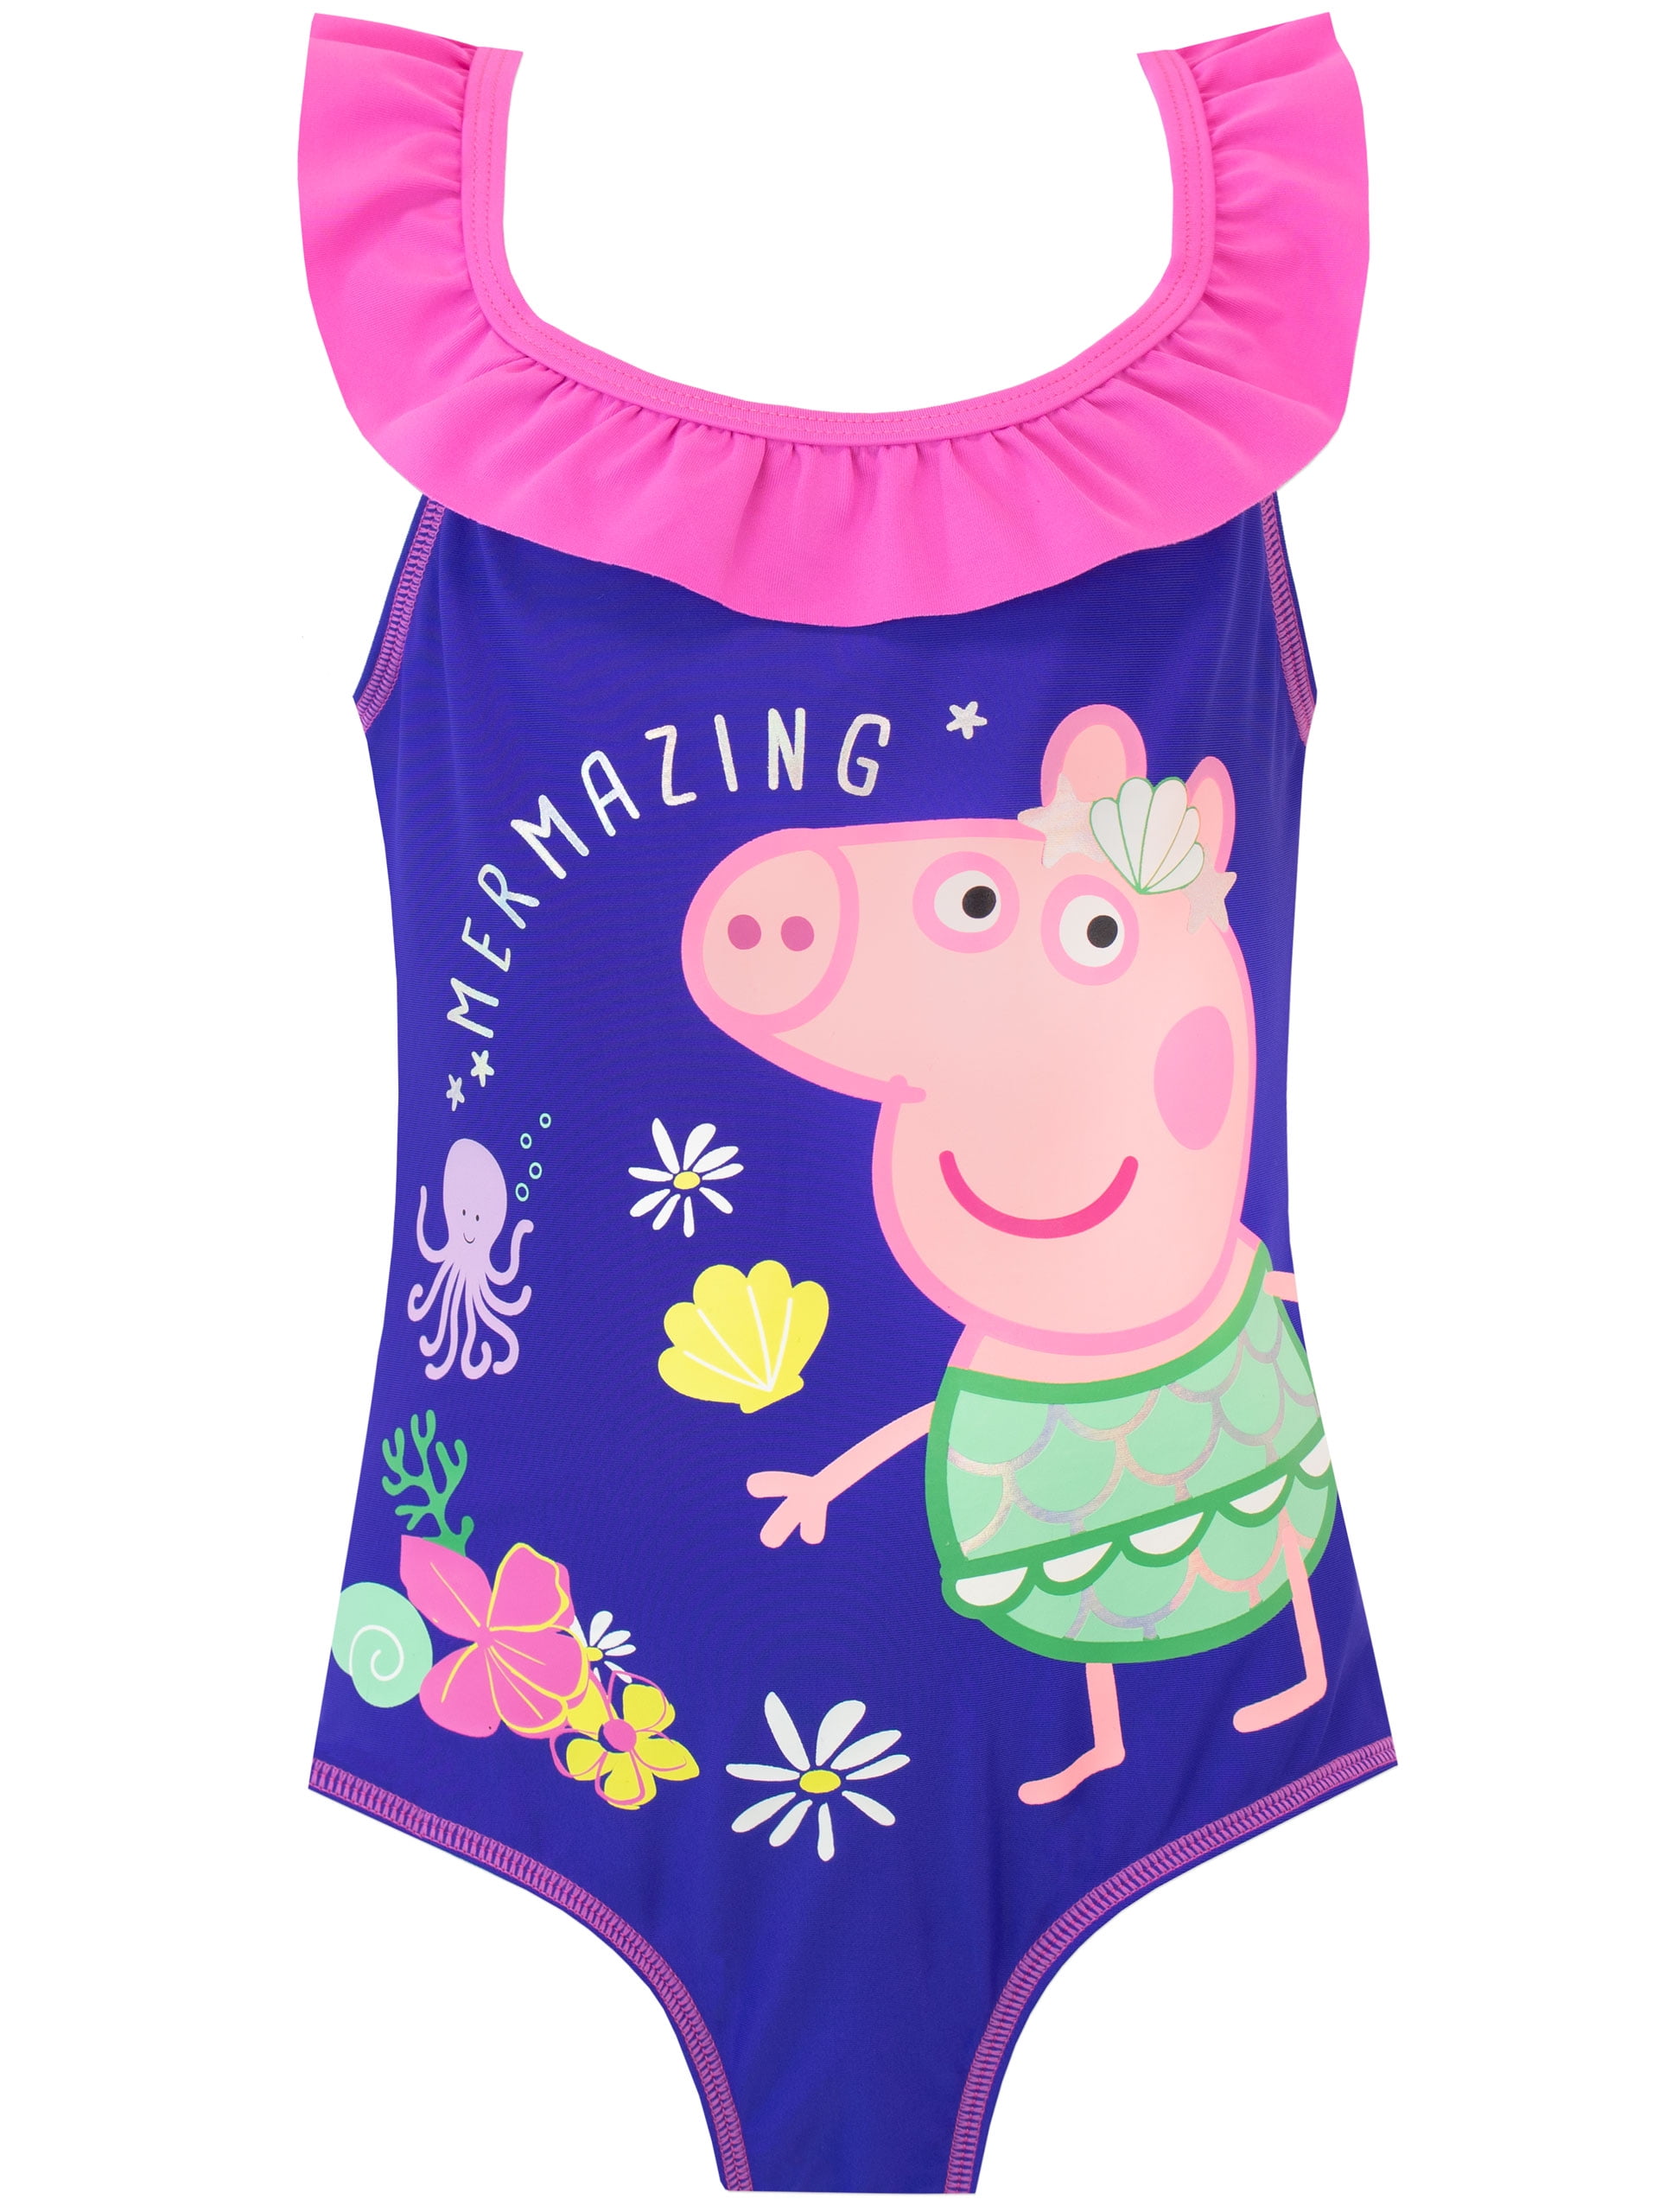 Peppa Pig Girls Mermaizing Swimsuit Pink Sizes 2T-8